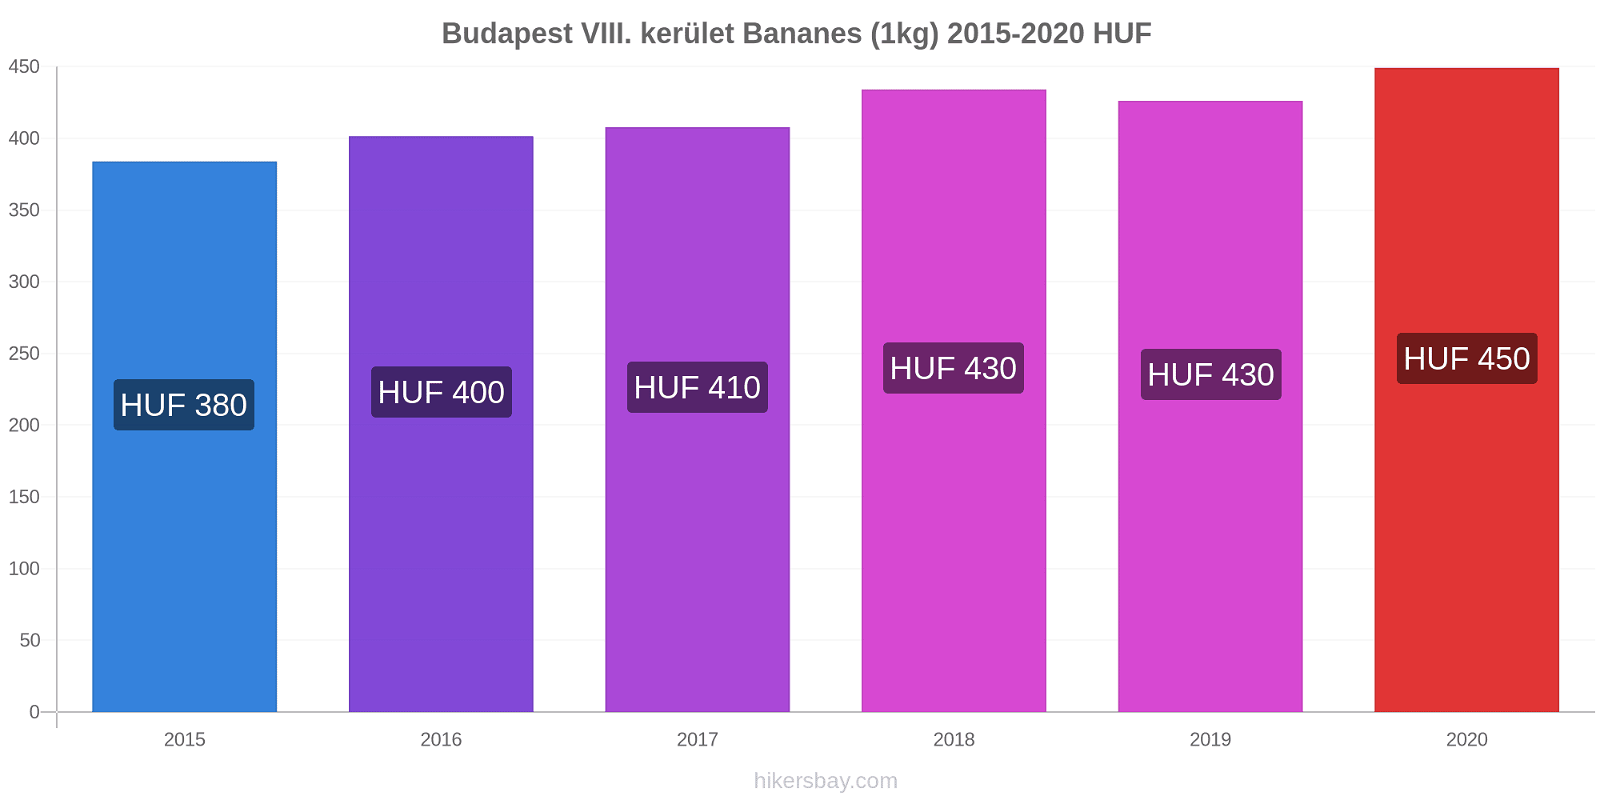 Budapest VIII. kerület changements de prix Bananes (1kg) hikersbay.com